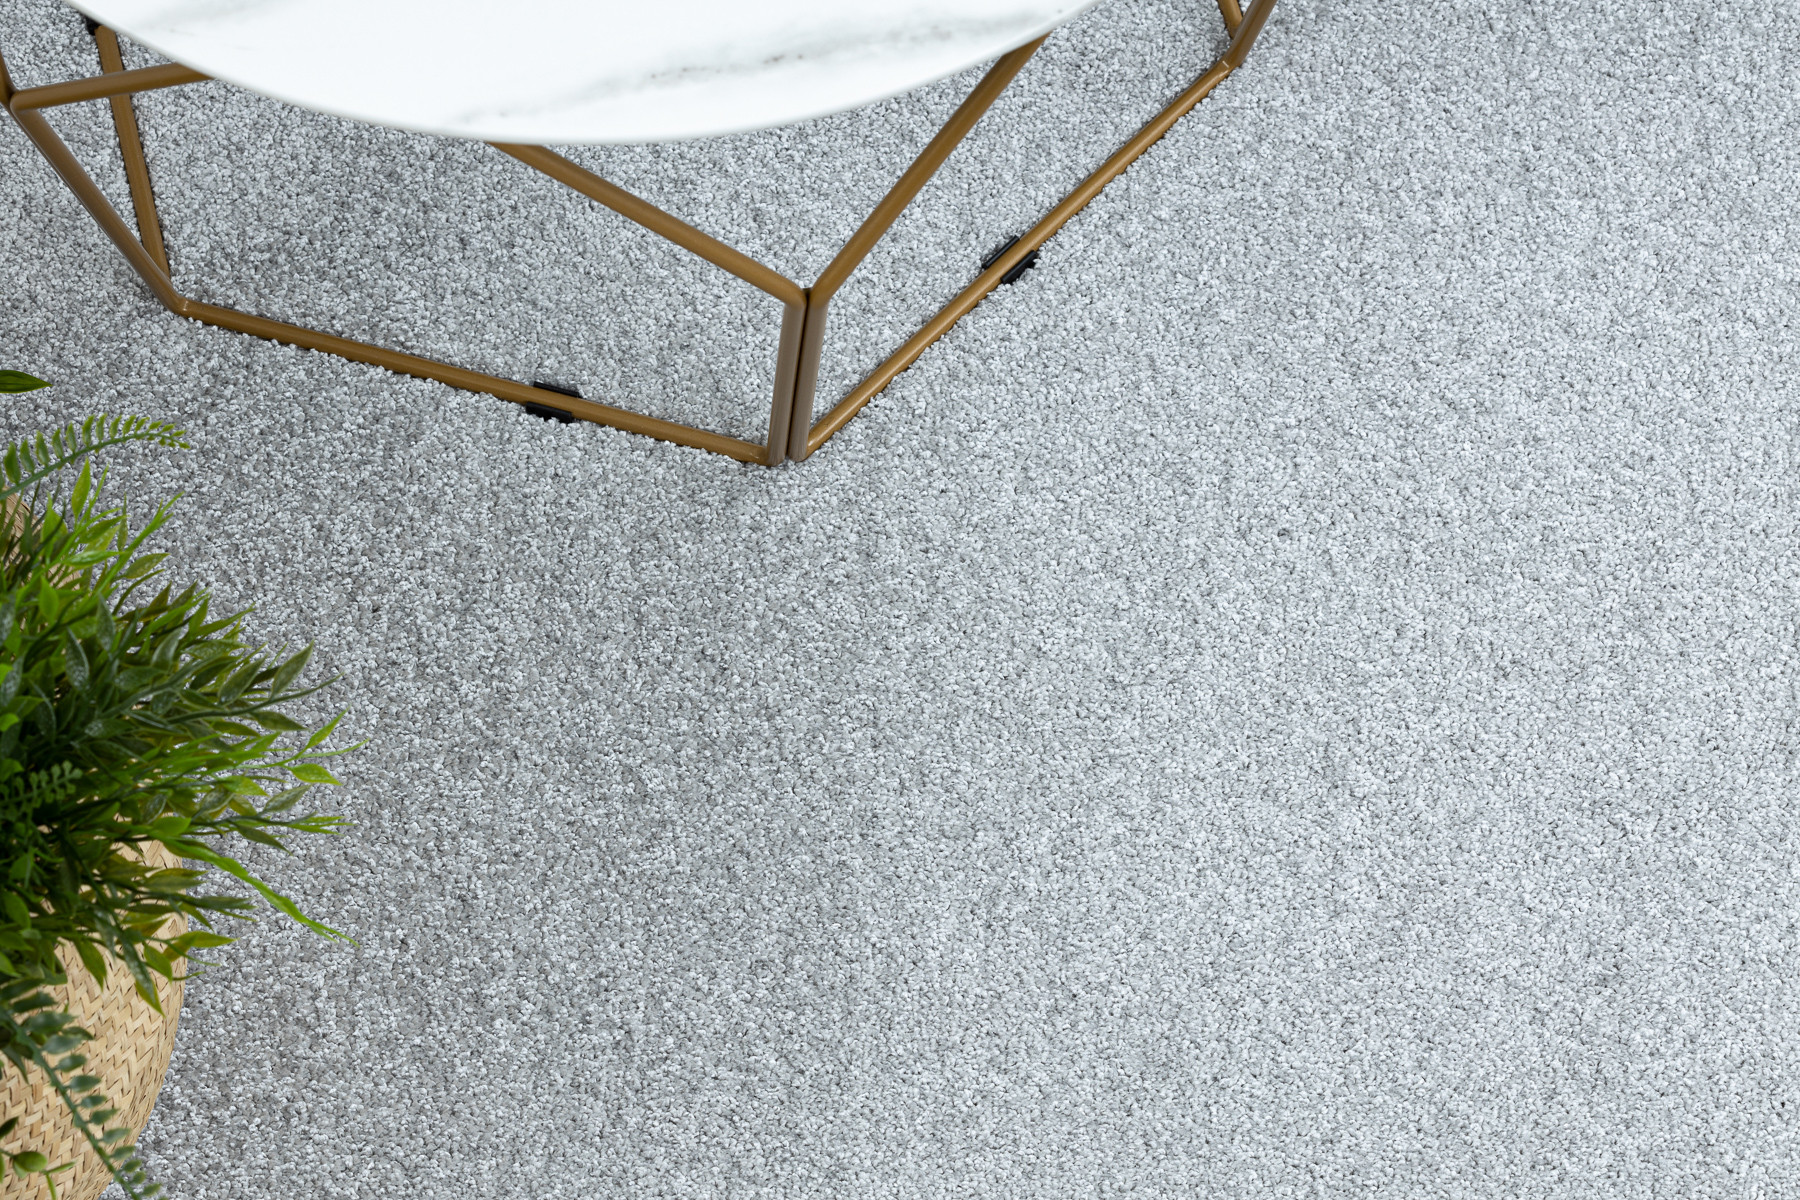 Metrážny koberec INDUS 95 sivý